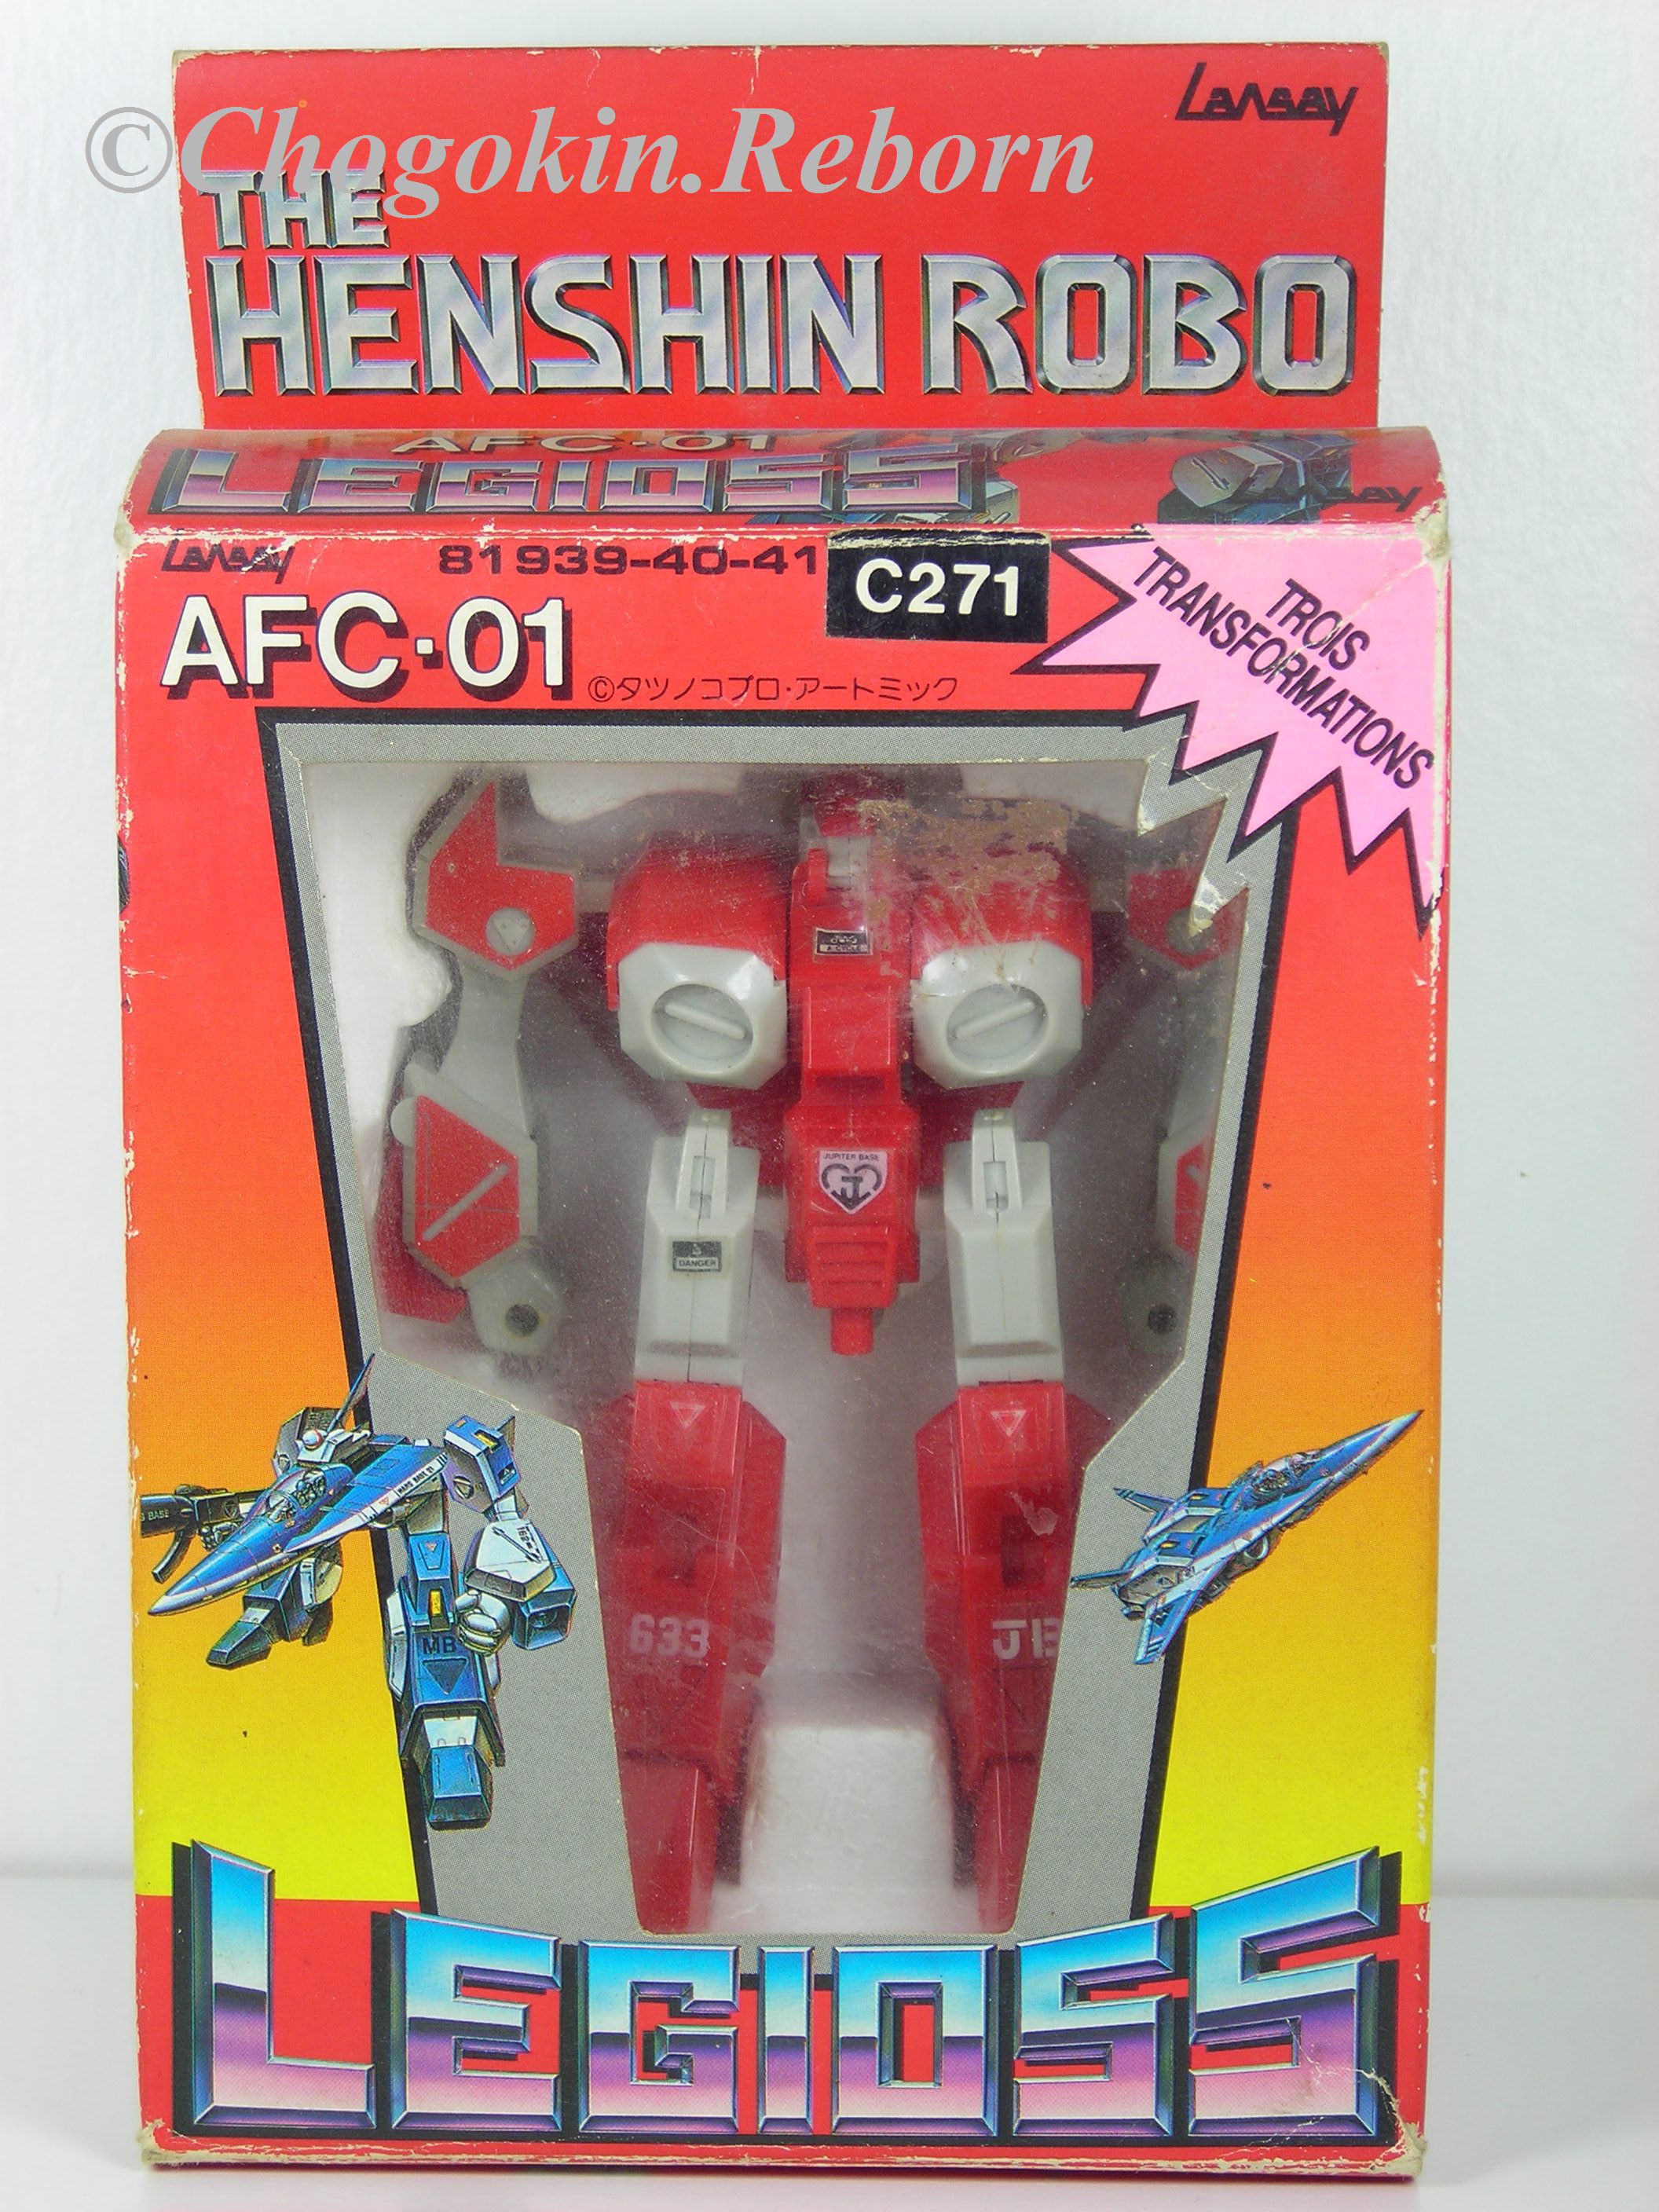 Legioss Henshin Robo / Mospeada / Robotech ( GAKKEN / LANSAY ) - 1984 13010606150115923210734803